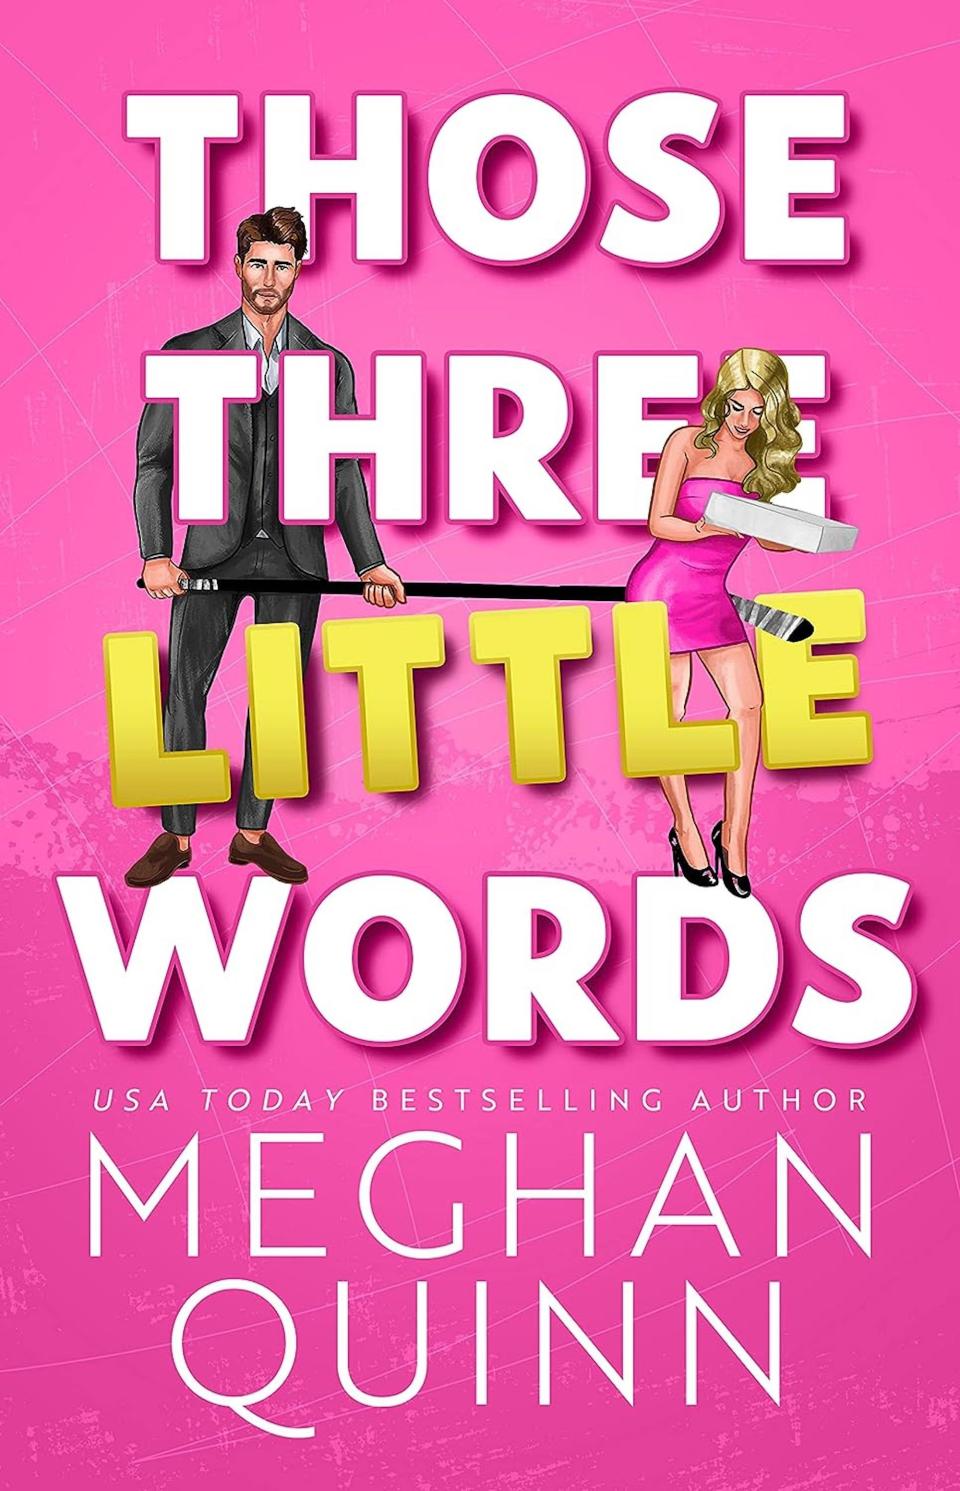 "Those Three Little Words" by Meghan Quinn.